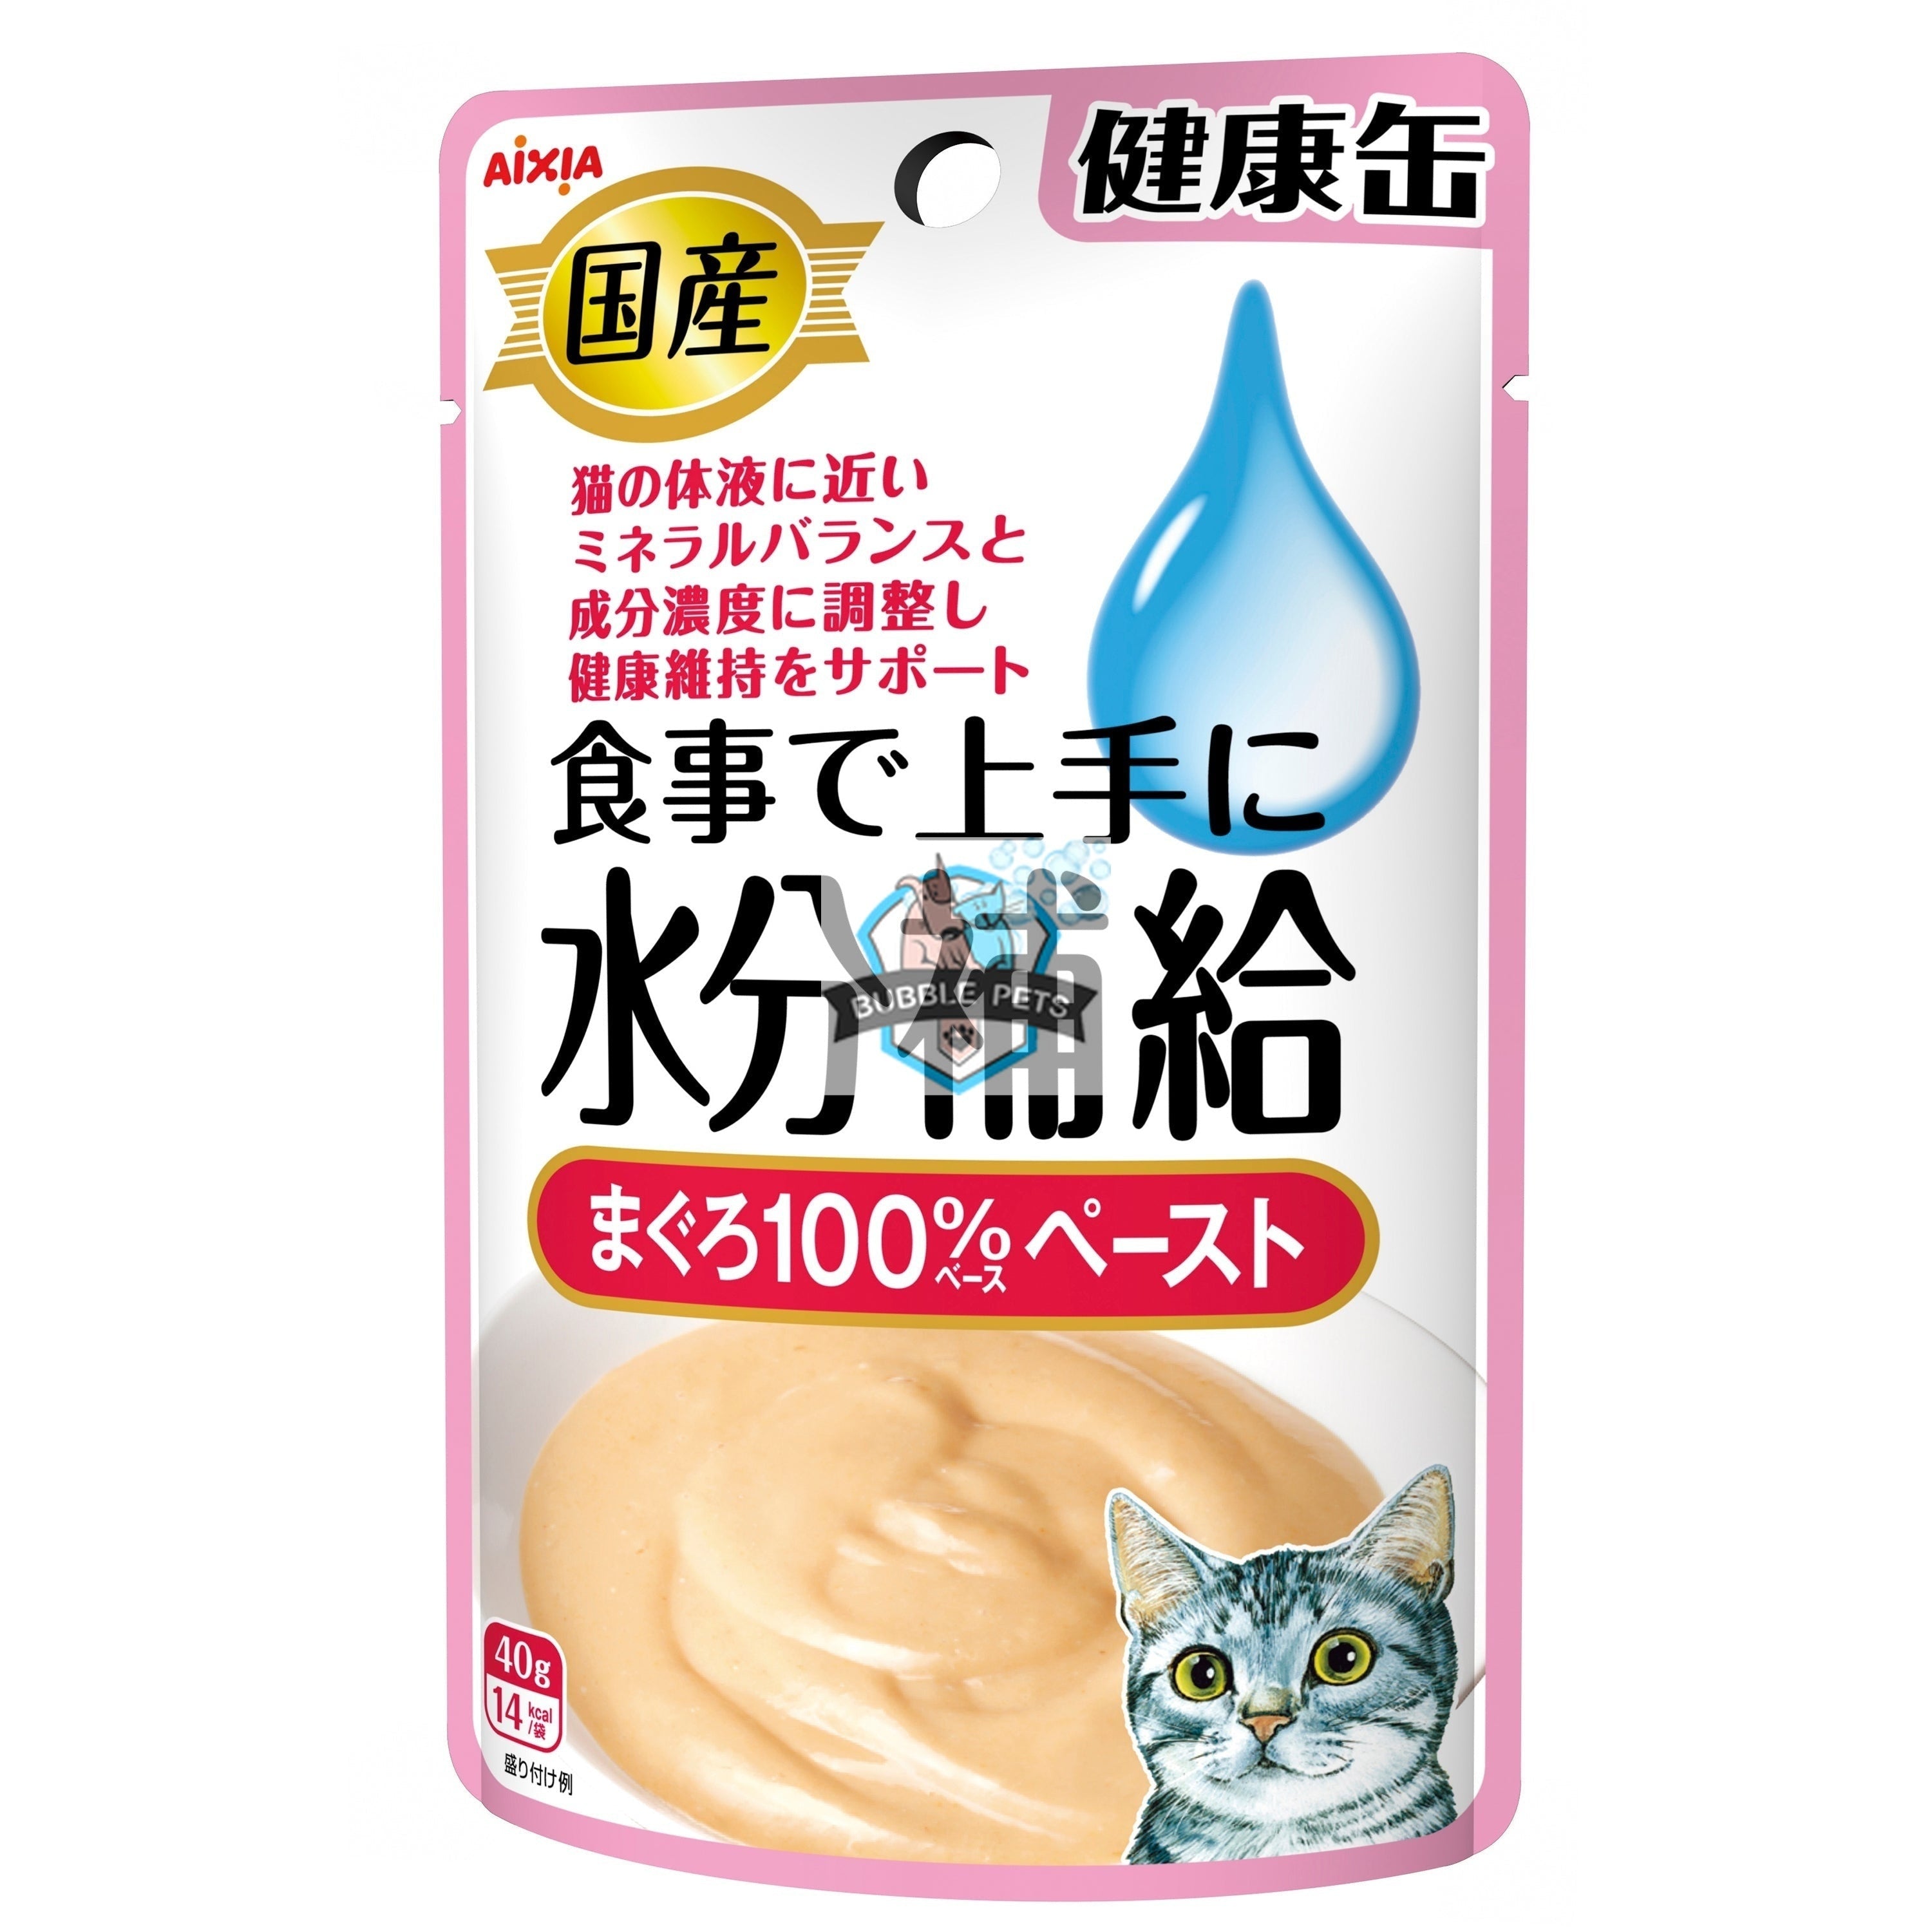 20% OFF PROMO Aixia Kenko Water Supplement Tuna Paste Pouch